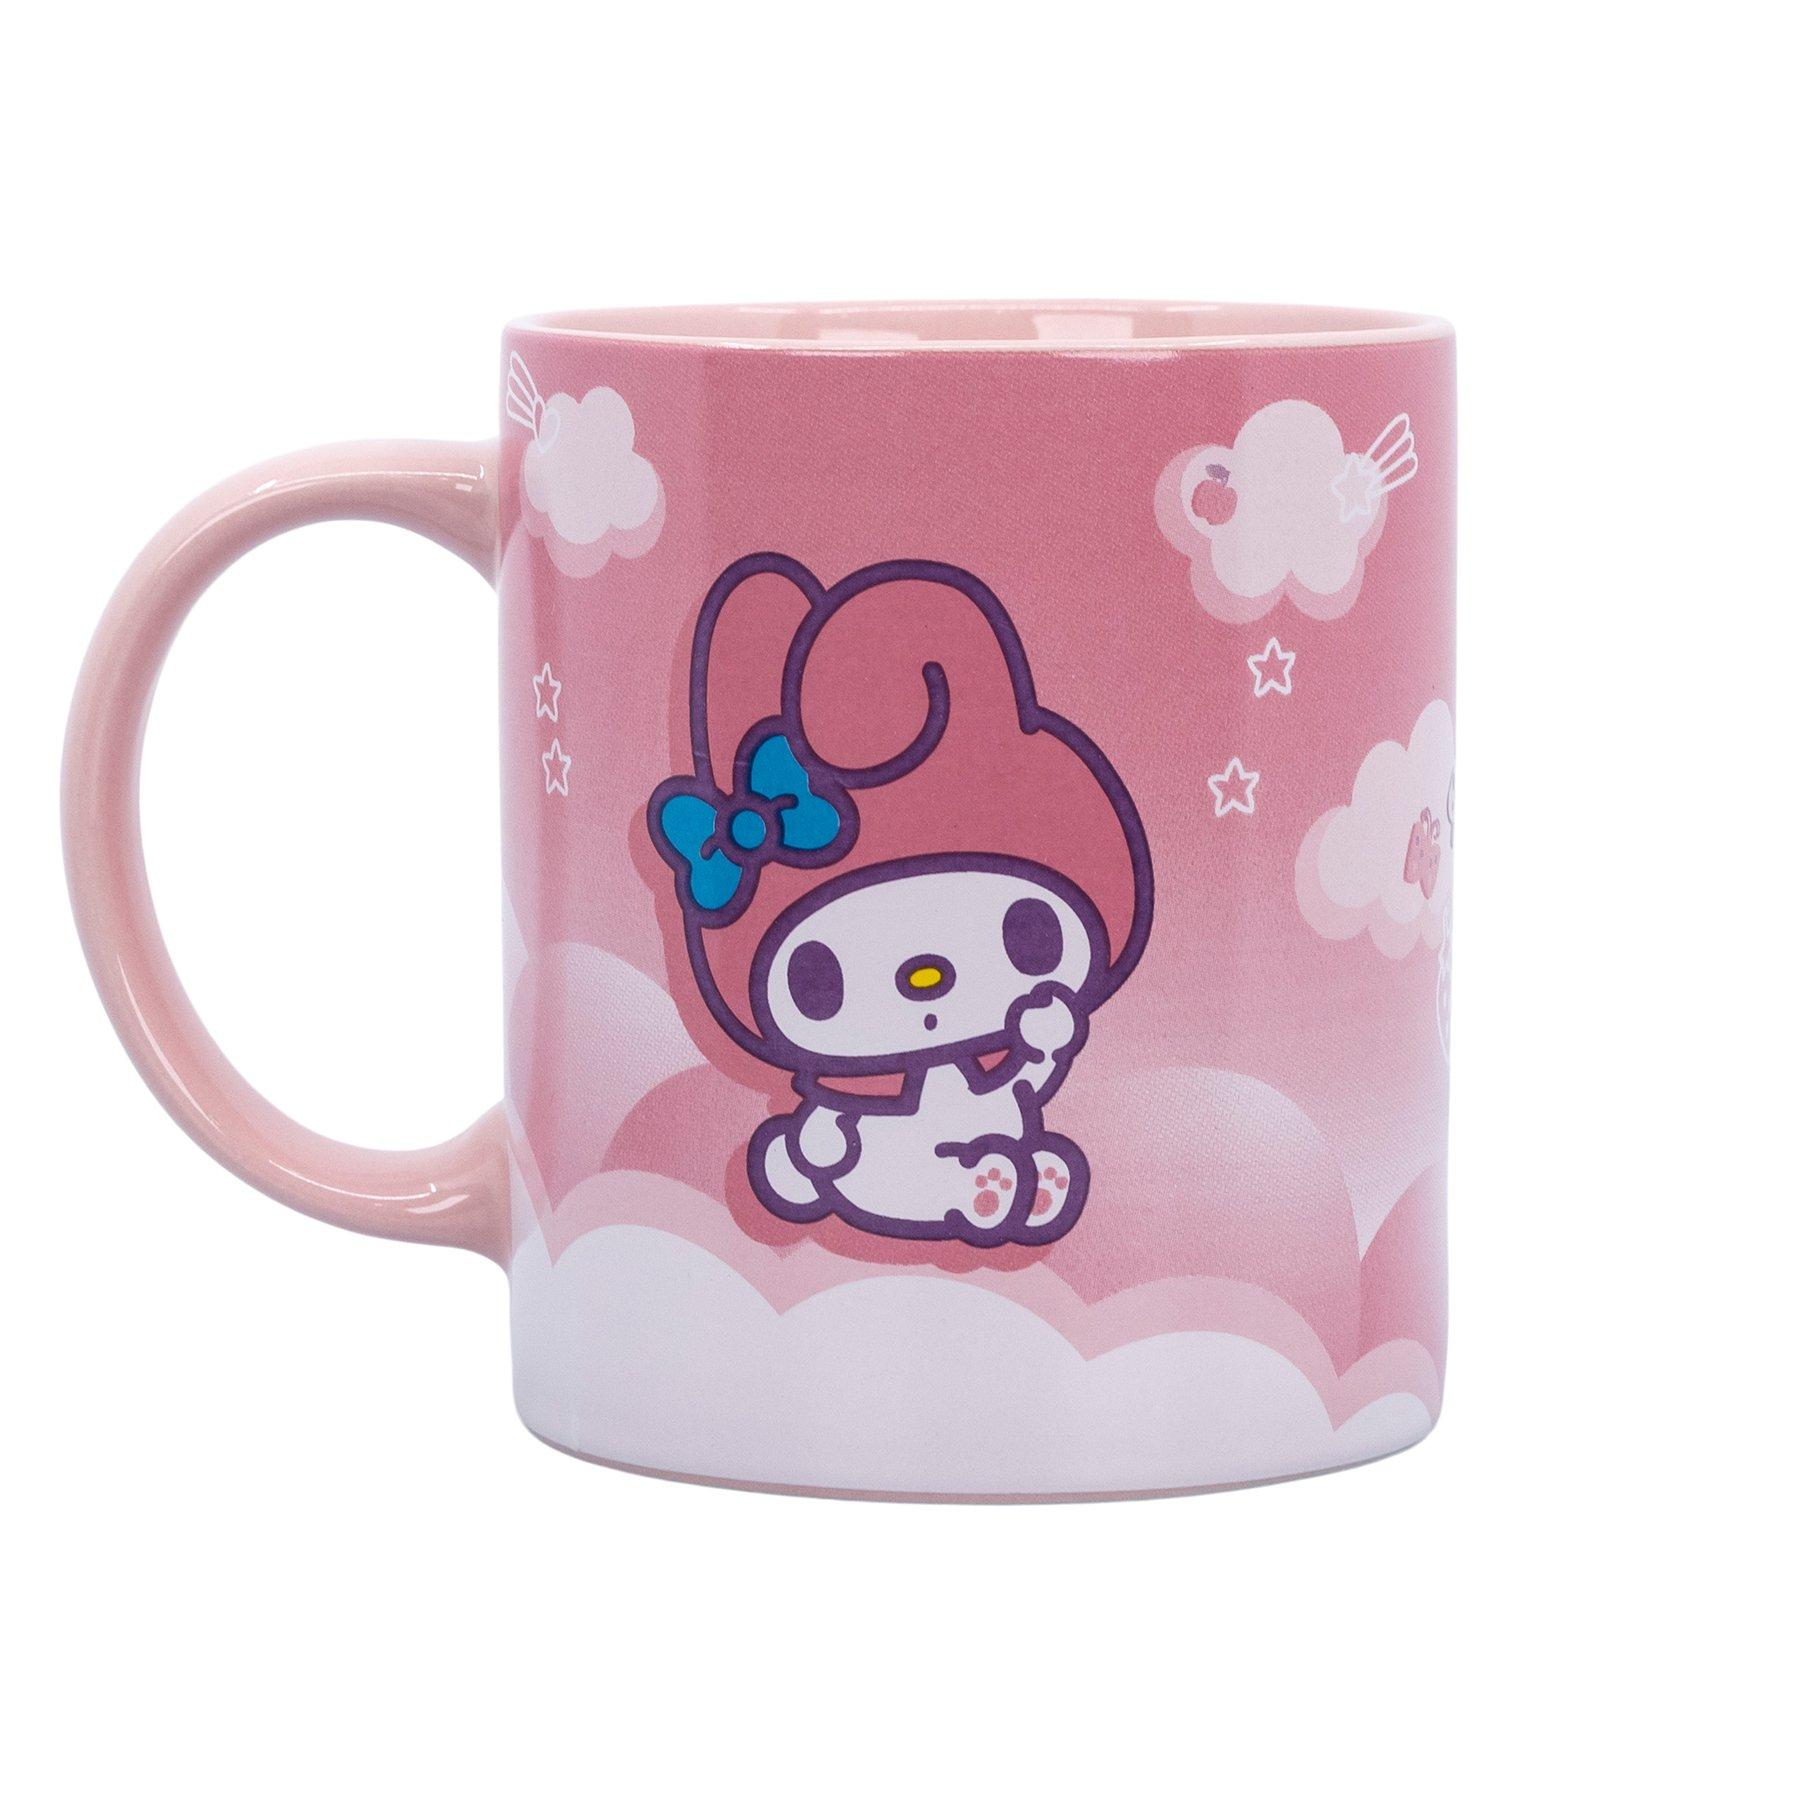 https://media.gamestop.com/i/gamestop/20005614_ALT03/Hello-Kitty-and-Friends-My-Melody-Mug-Warmer-with-Mug-..?$pdp$